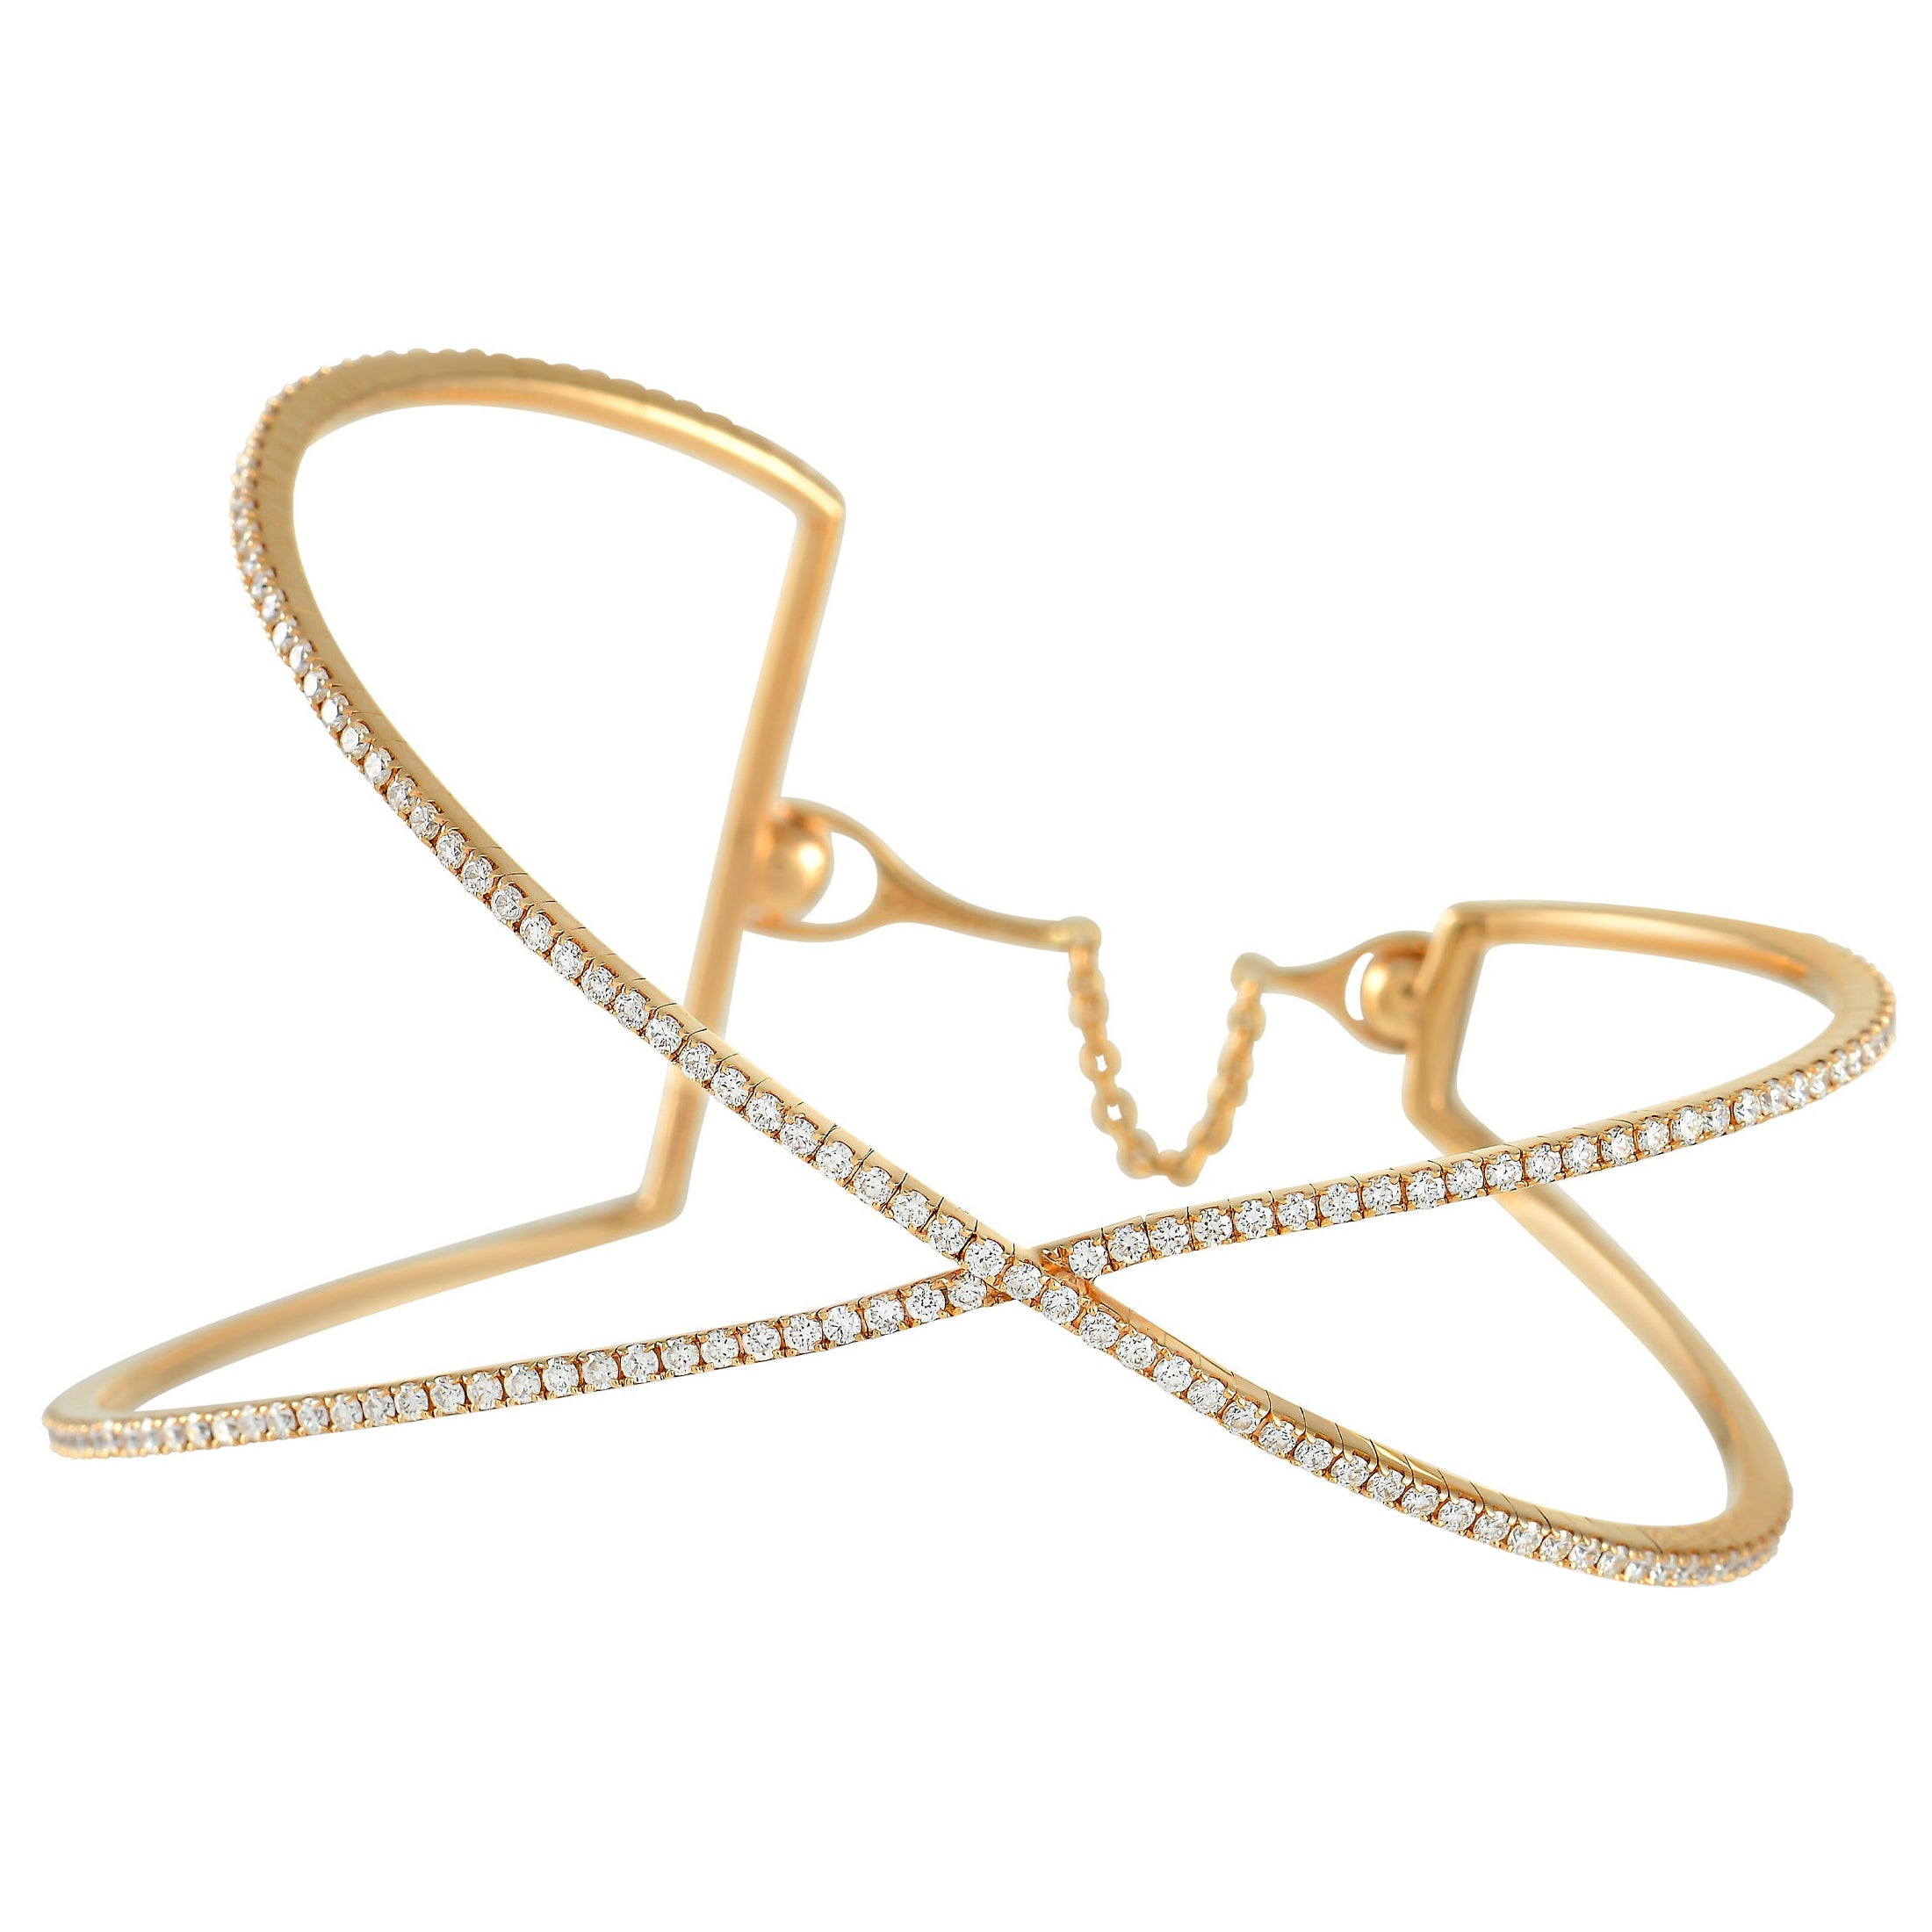 Louis Vuitton - Empreinte 18K 2.0ct Bangle Bracelet Size Small Diamond White Gold